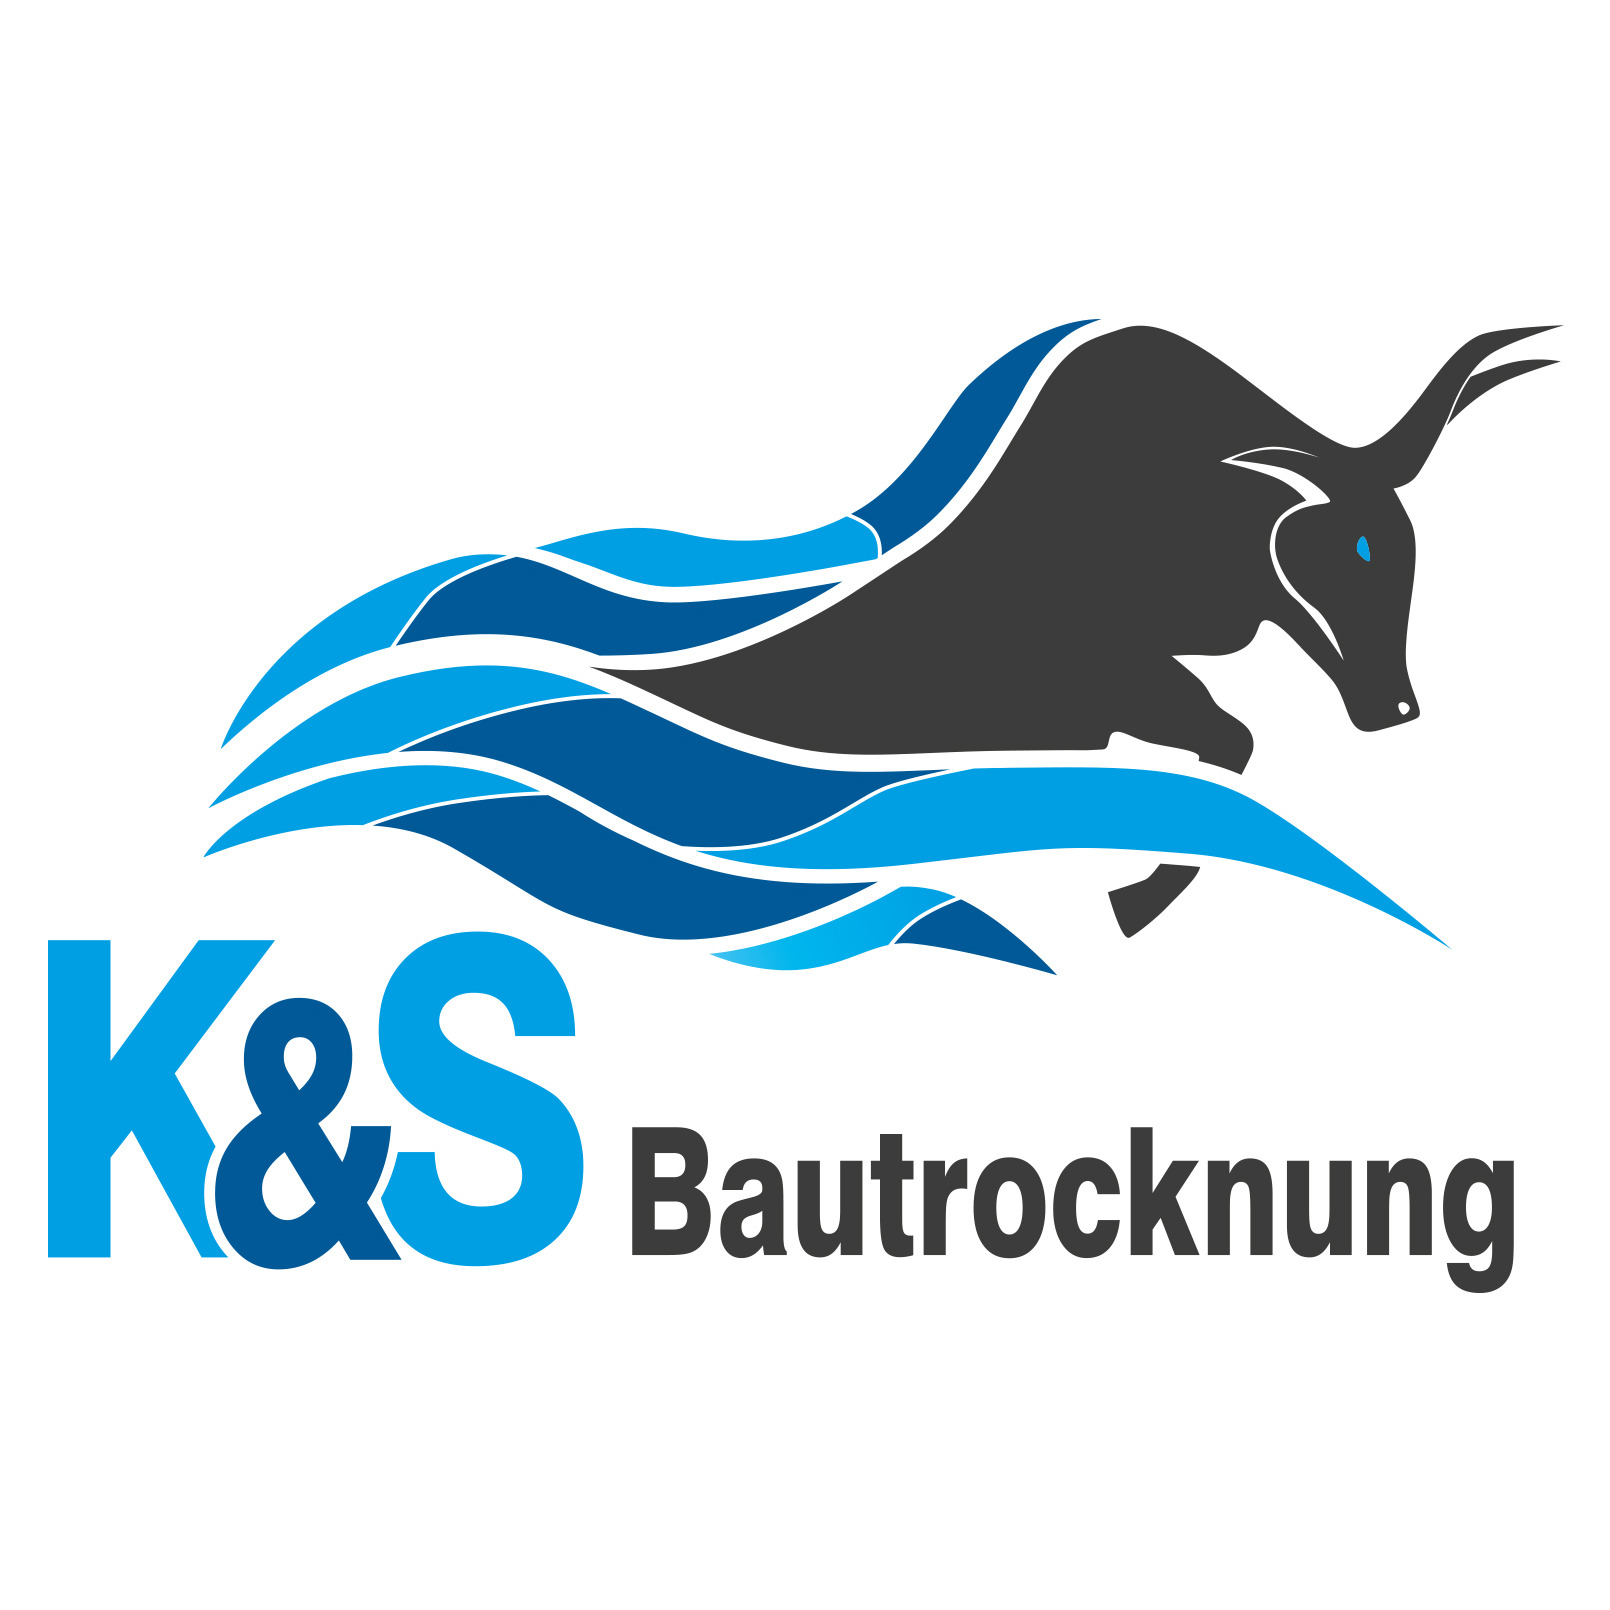 K&S Bautrocknung in Nünschweiler - Logo